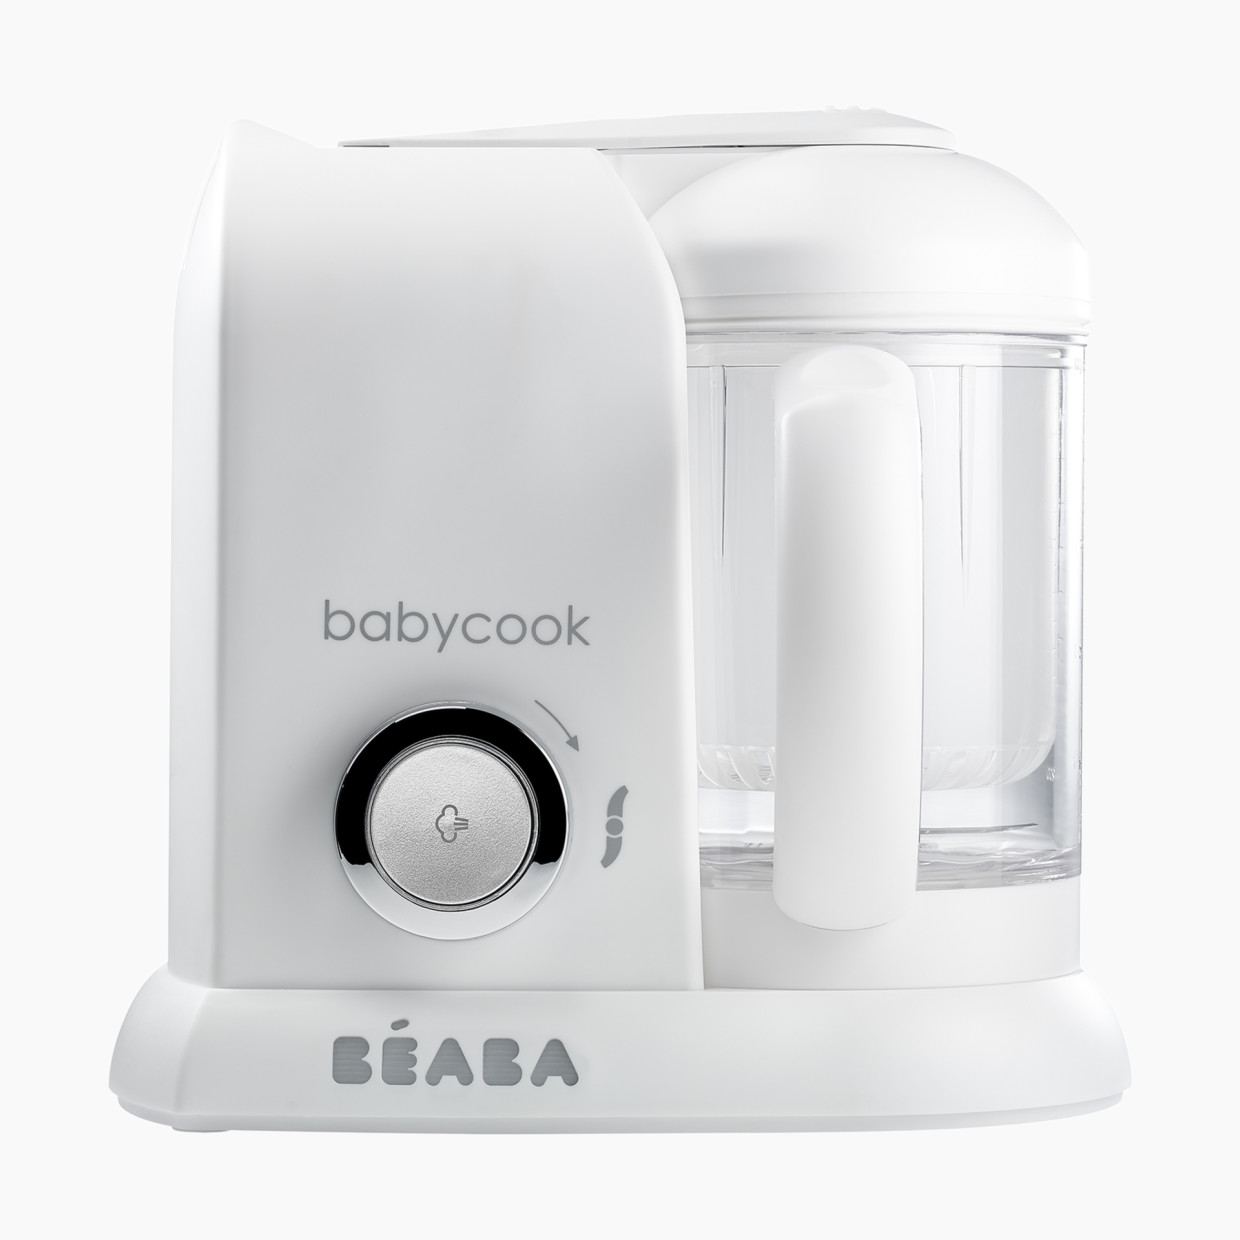 Beaba Babycook Solo Baby Food Maker - White.